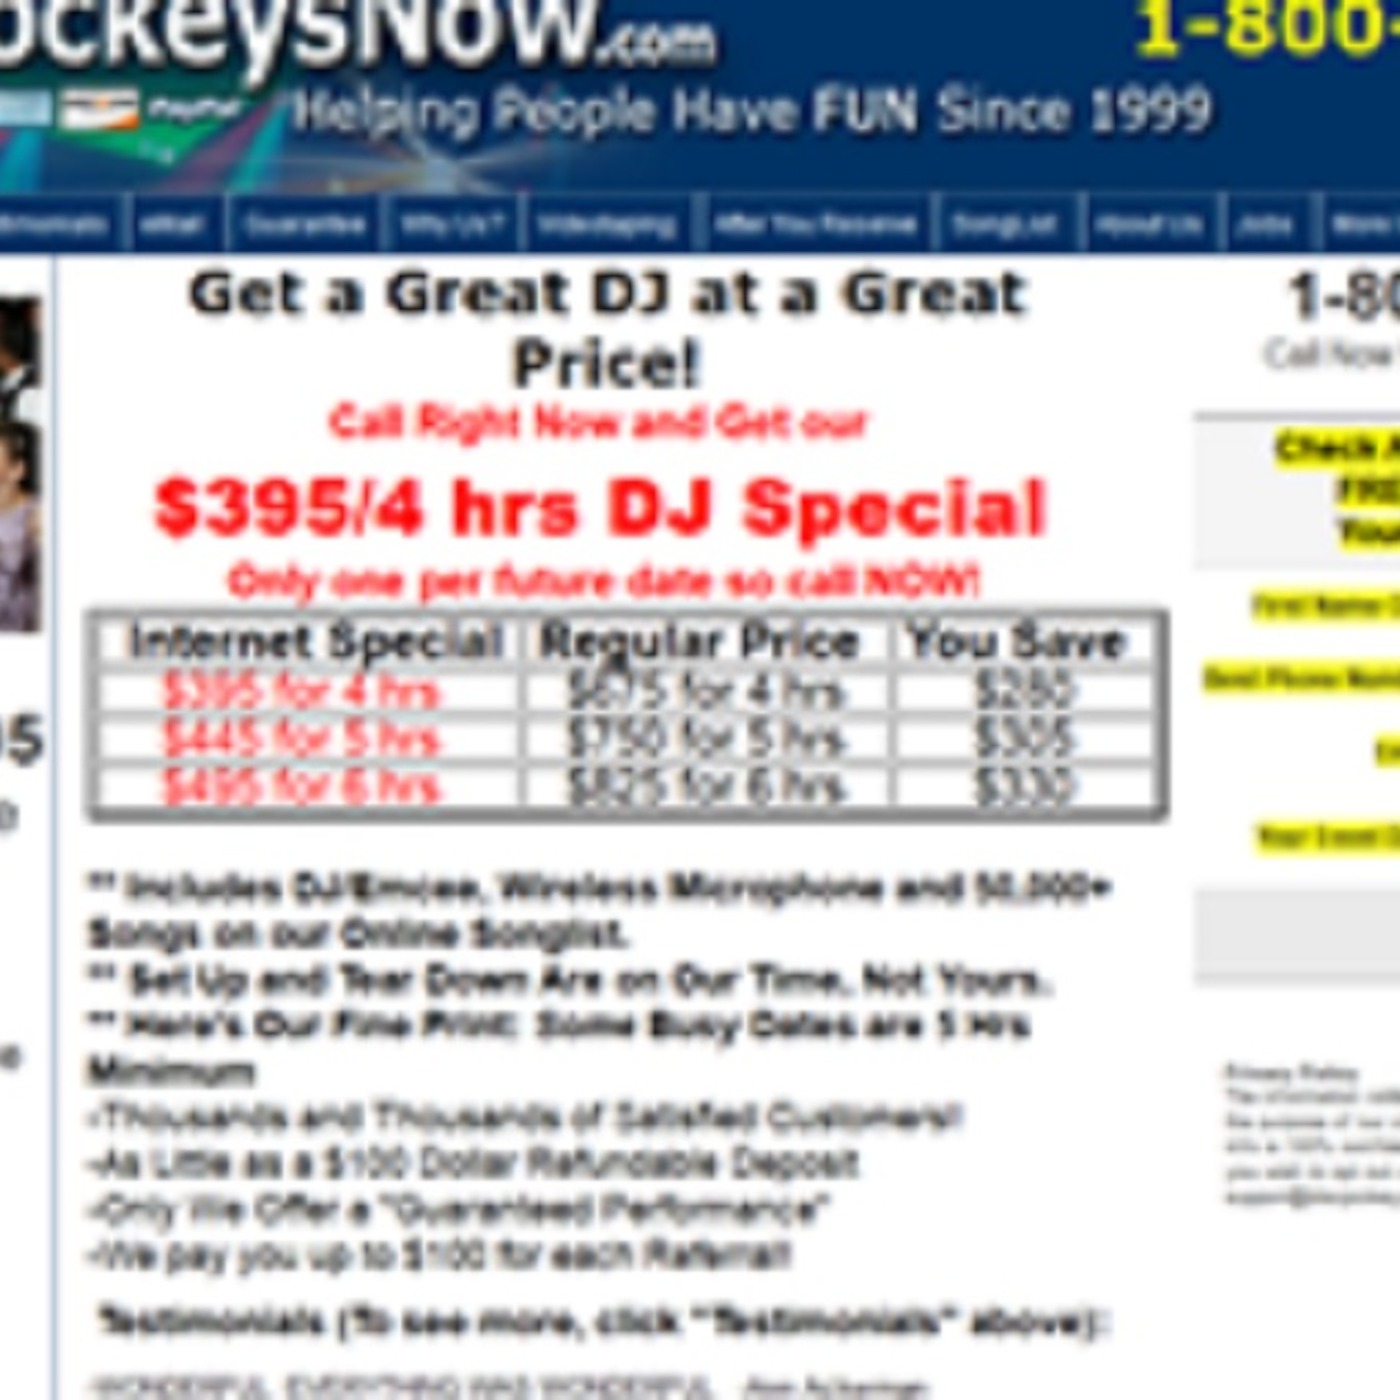 Disc Jockeys In My Area - 800-431-0895 http://discjockeysnow.com